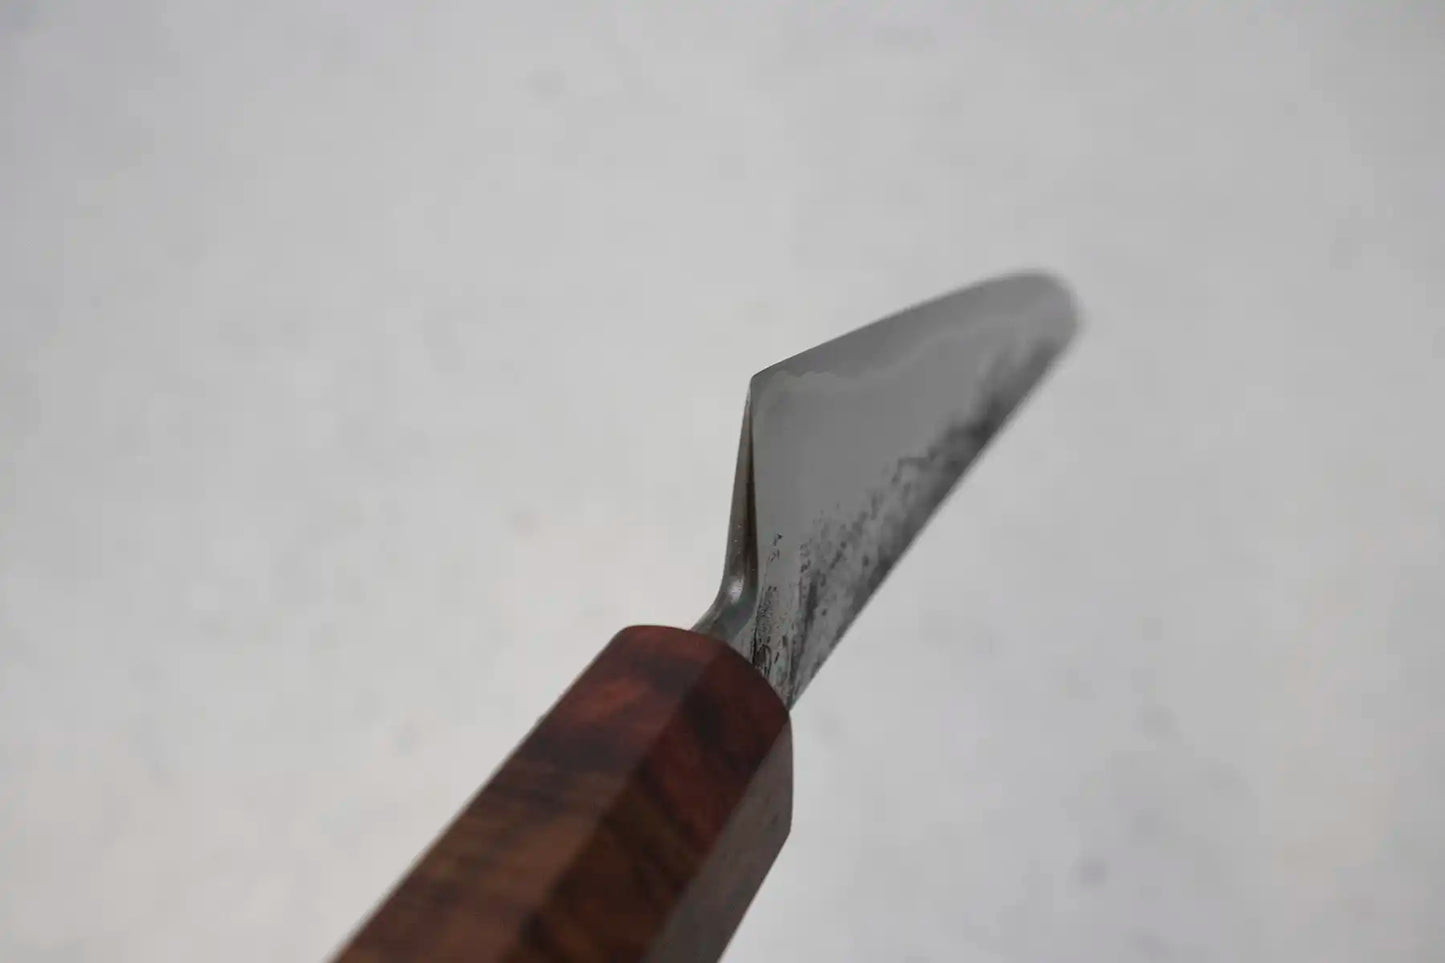 Hunter Valley Blades Honesuki (Boning Knife) 150mm, Curly rosewood handle by Tansu Knives